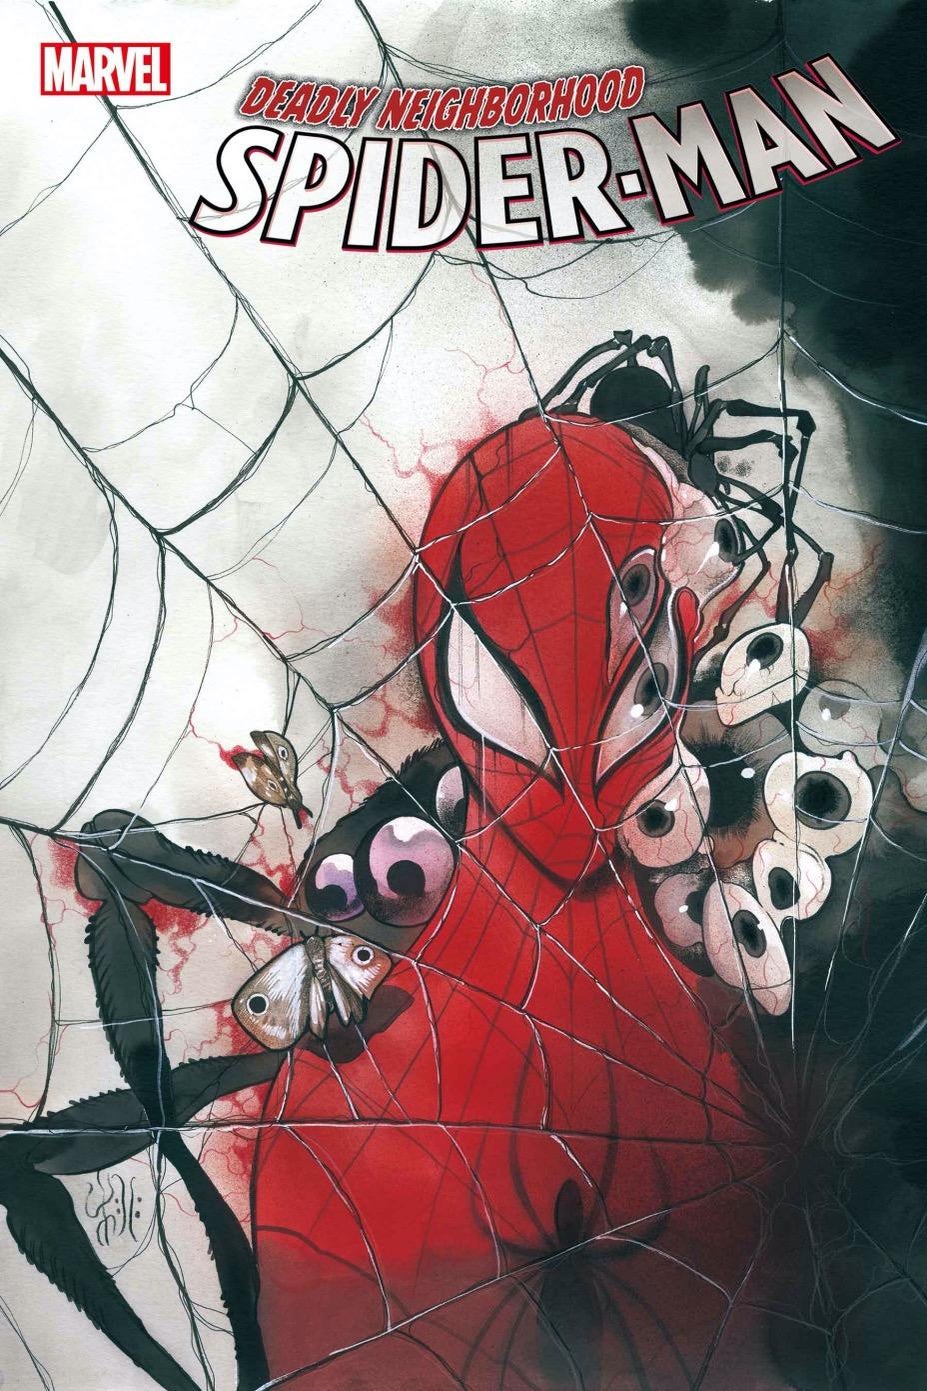 deadly-neighborhood-spider-man-ferreya-cover.jpg